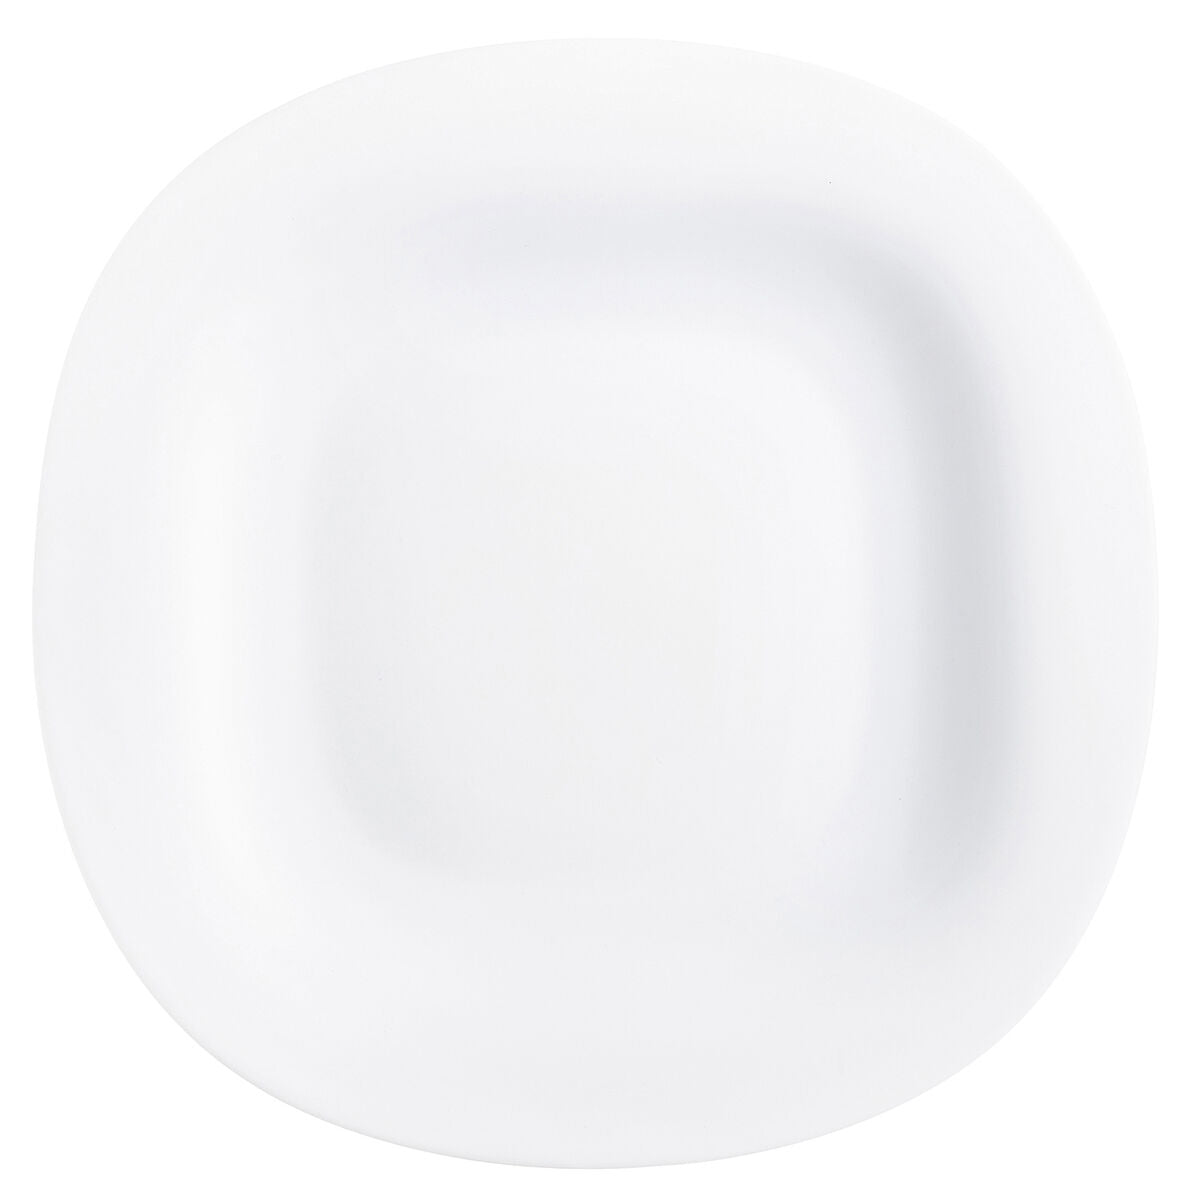 Eetbord Luminarc Carine Blanco Wit Glas Ø 26 cm (24 Stuks)